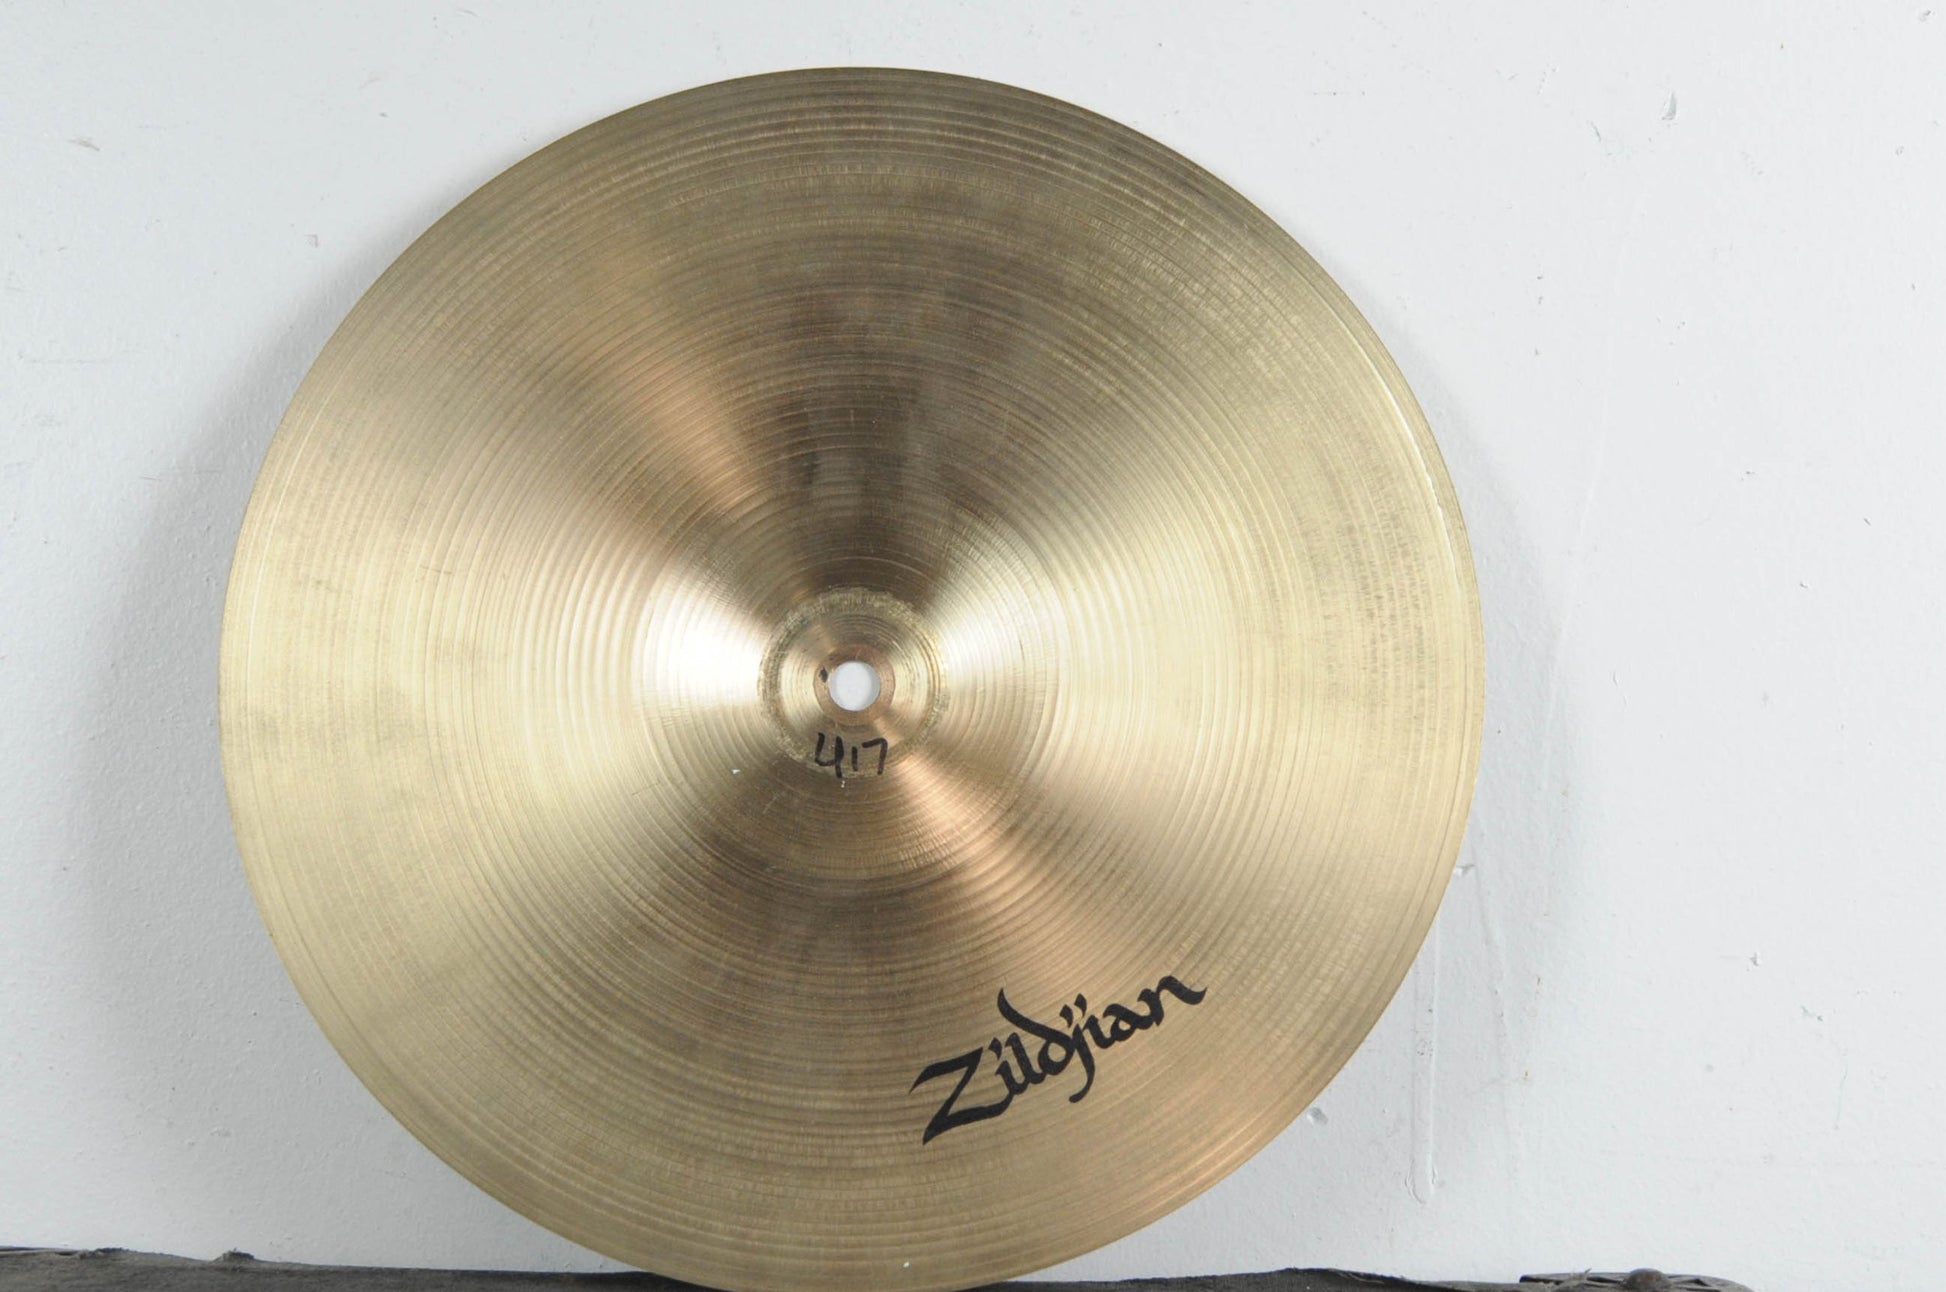 1982-1992 Zildjian A 12" Splash Cymbal 417g